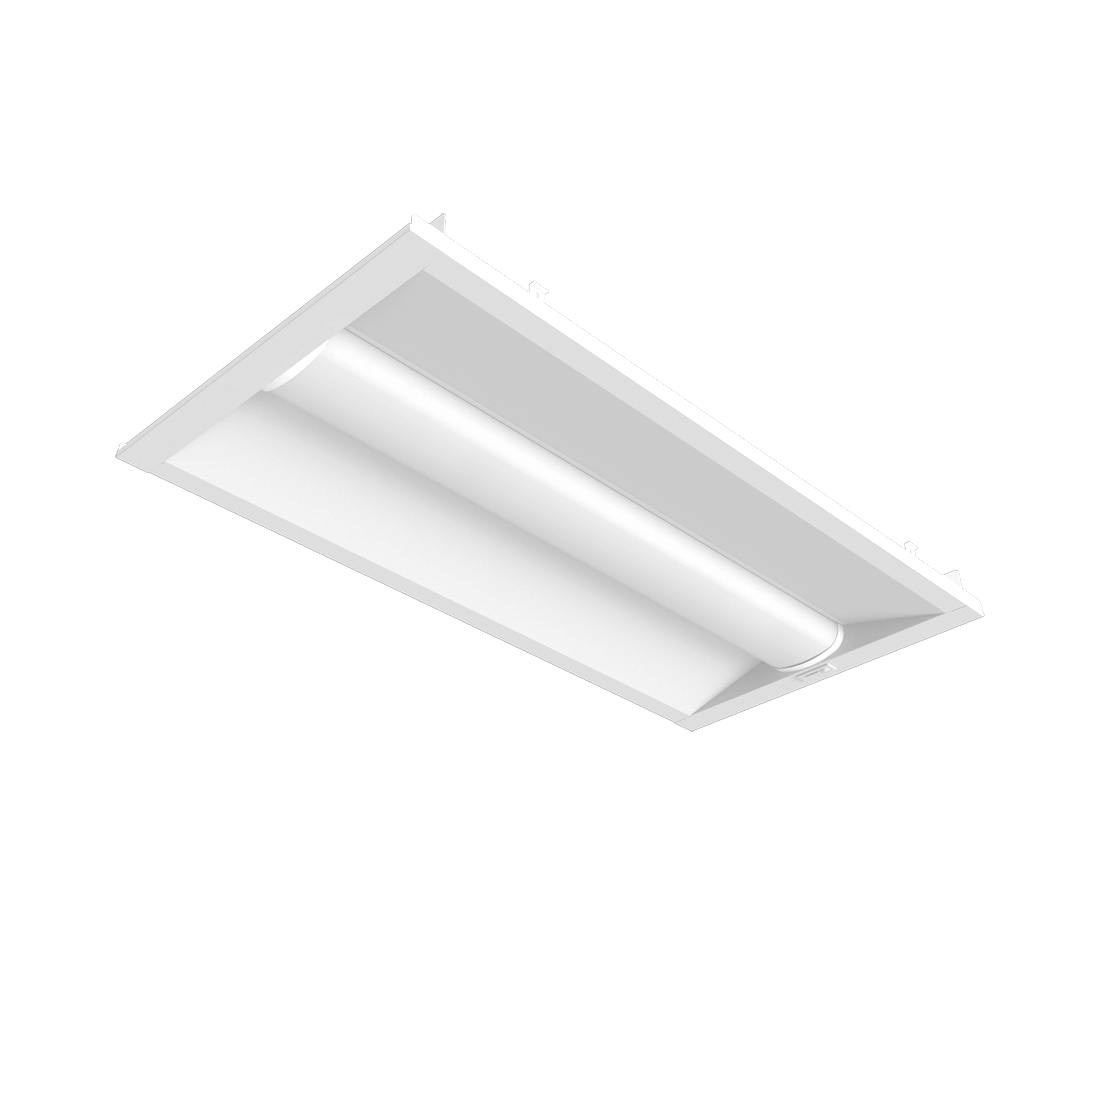 White LED troffer style light fixture